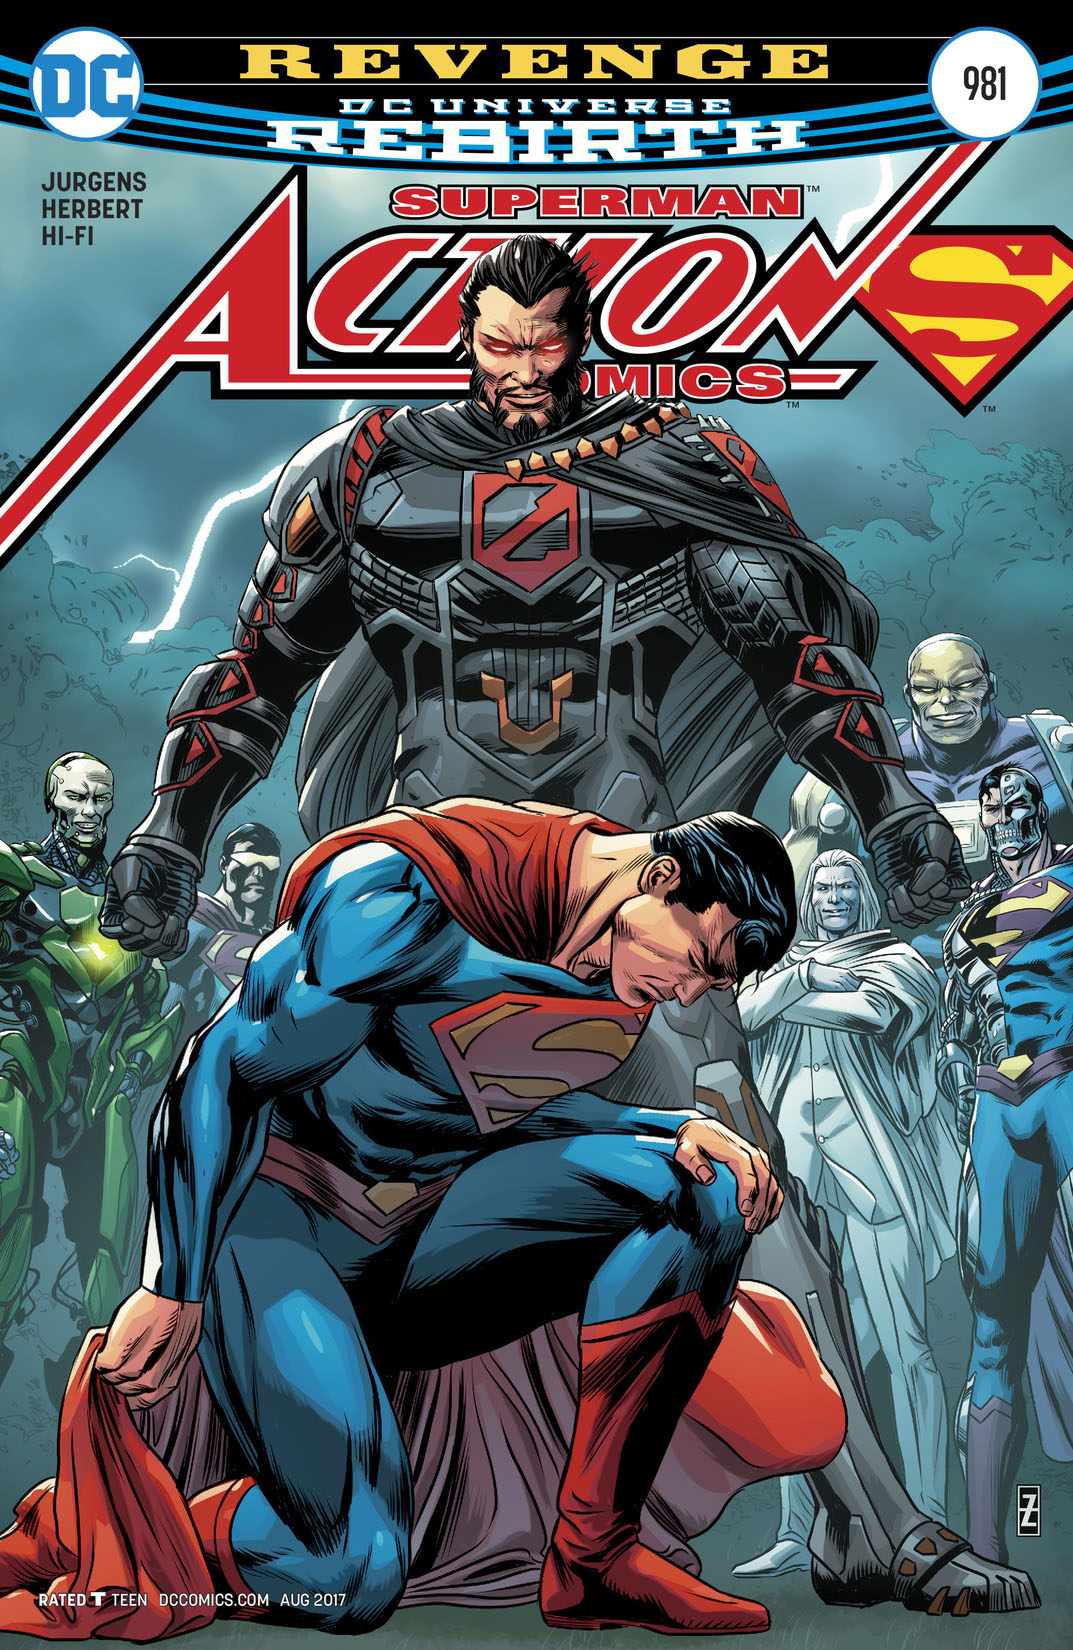 Action Comics (2016-) #981 preview images